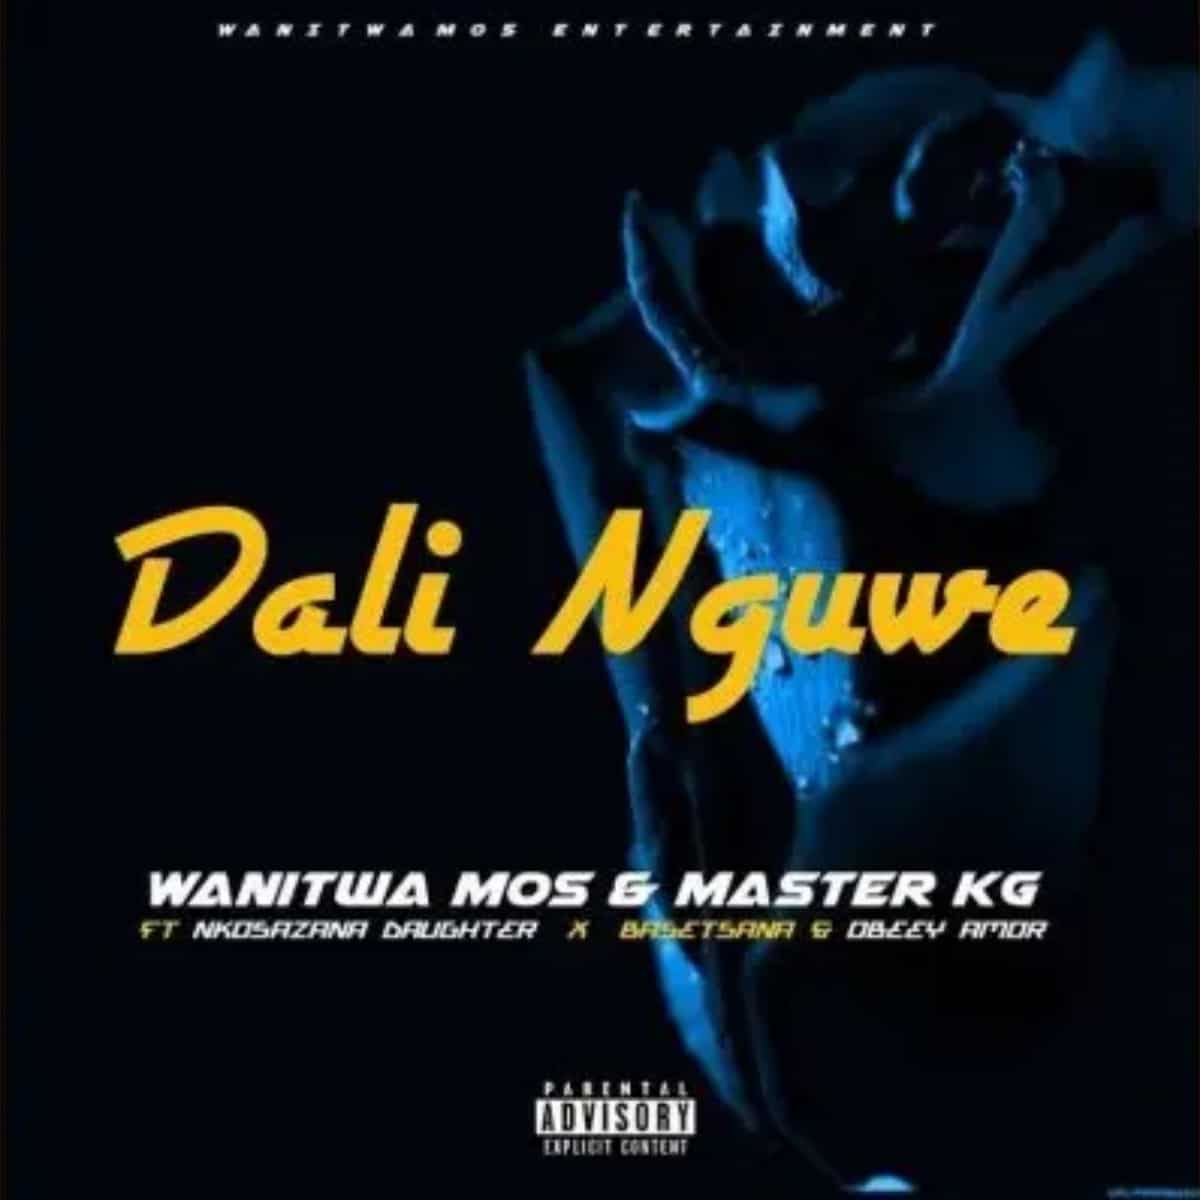 DOWNLOAD: Wanitwa Mos & Master KG Ft Nkosazana Daughter, Basetsana & Obeey Amor – “Dali Nguwe” Video + Audio Mp3